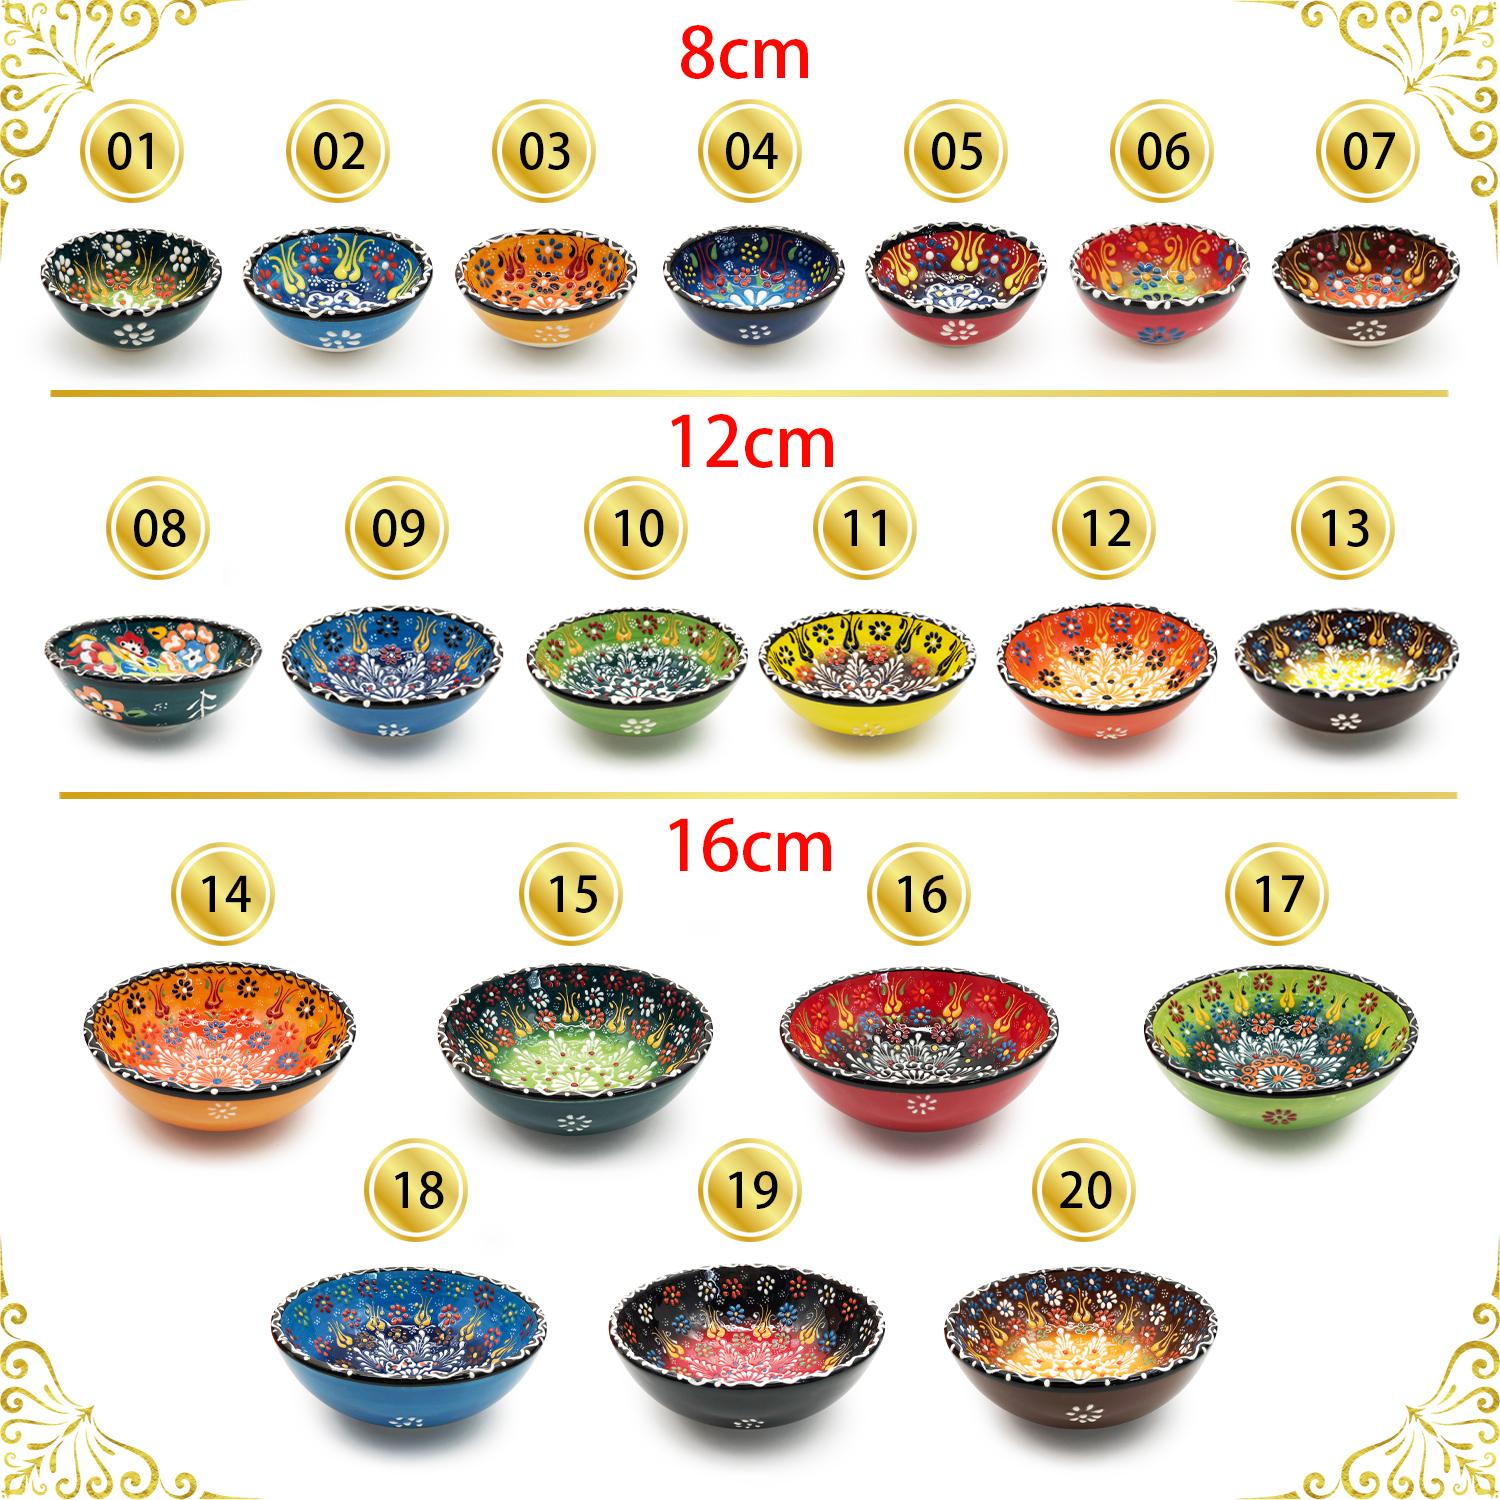 120MM手繪土耳其傳統工藝陶瓷碗， 土耳其餐具奧斯曼帝國浮雕圖案土耳其藝術時尚潮物(VTR-CERAMIC-BOWL-120MM-30106)